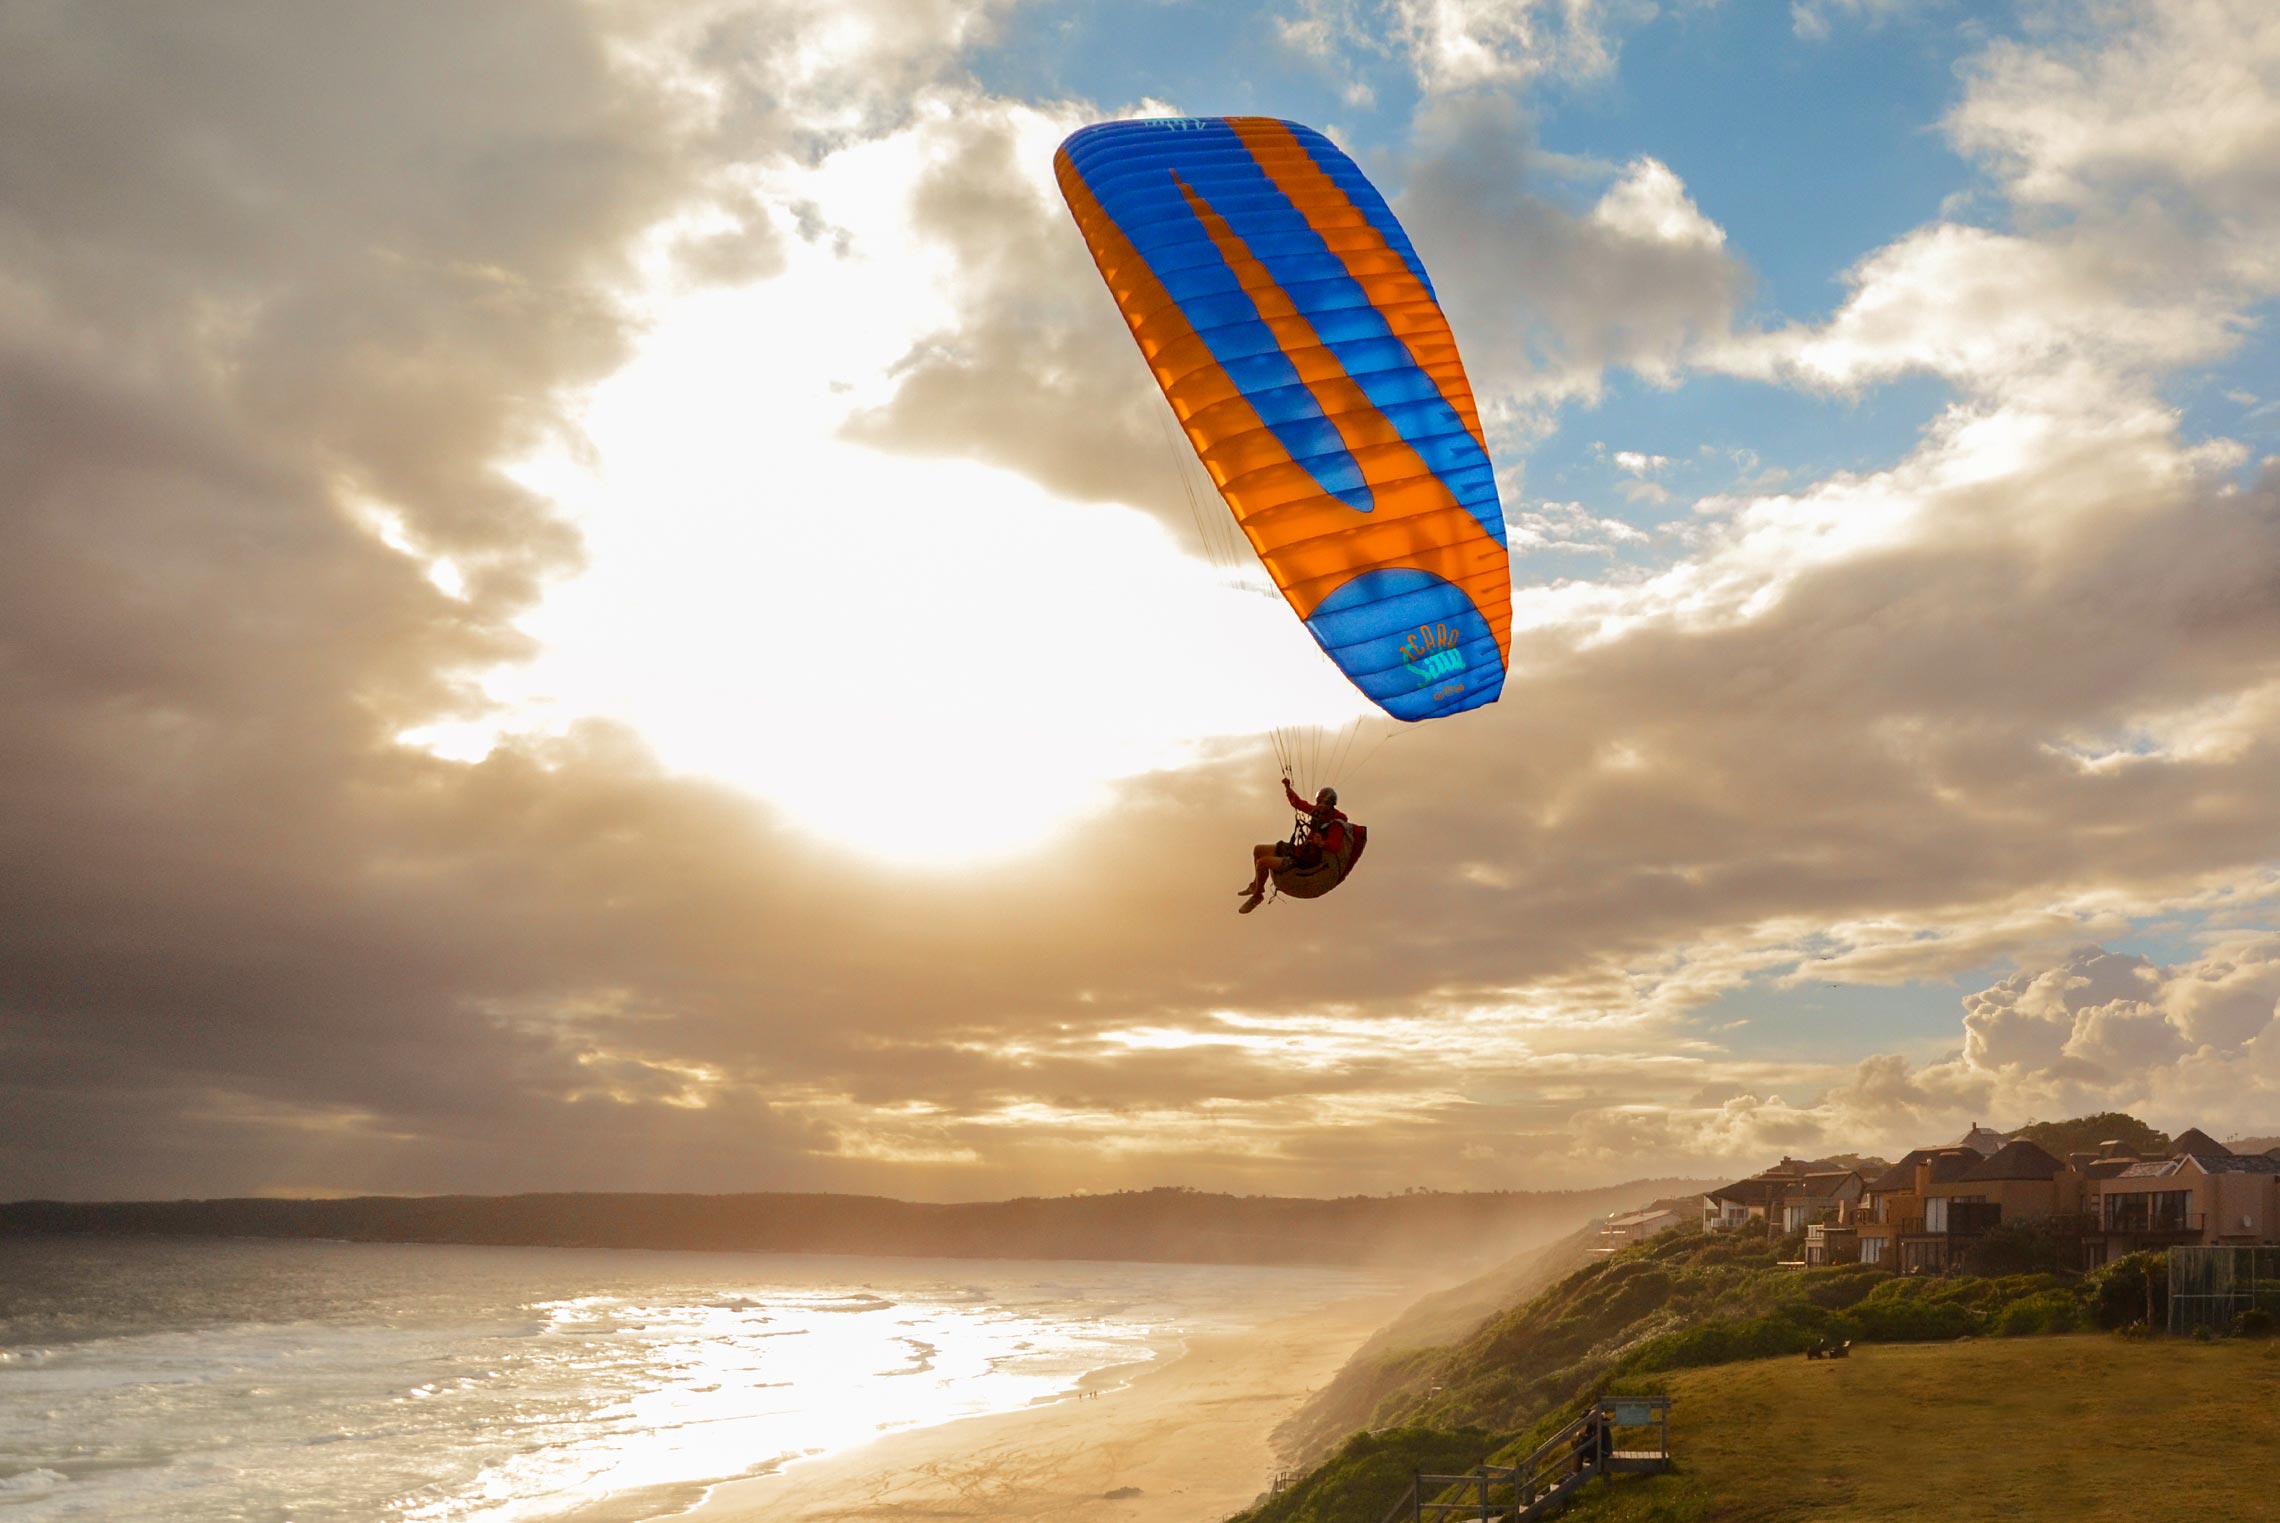 New paraglider Icaro Sitta for sale